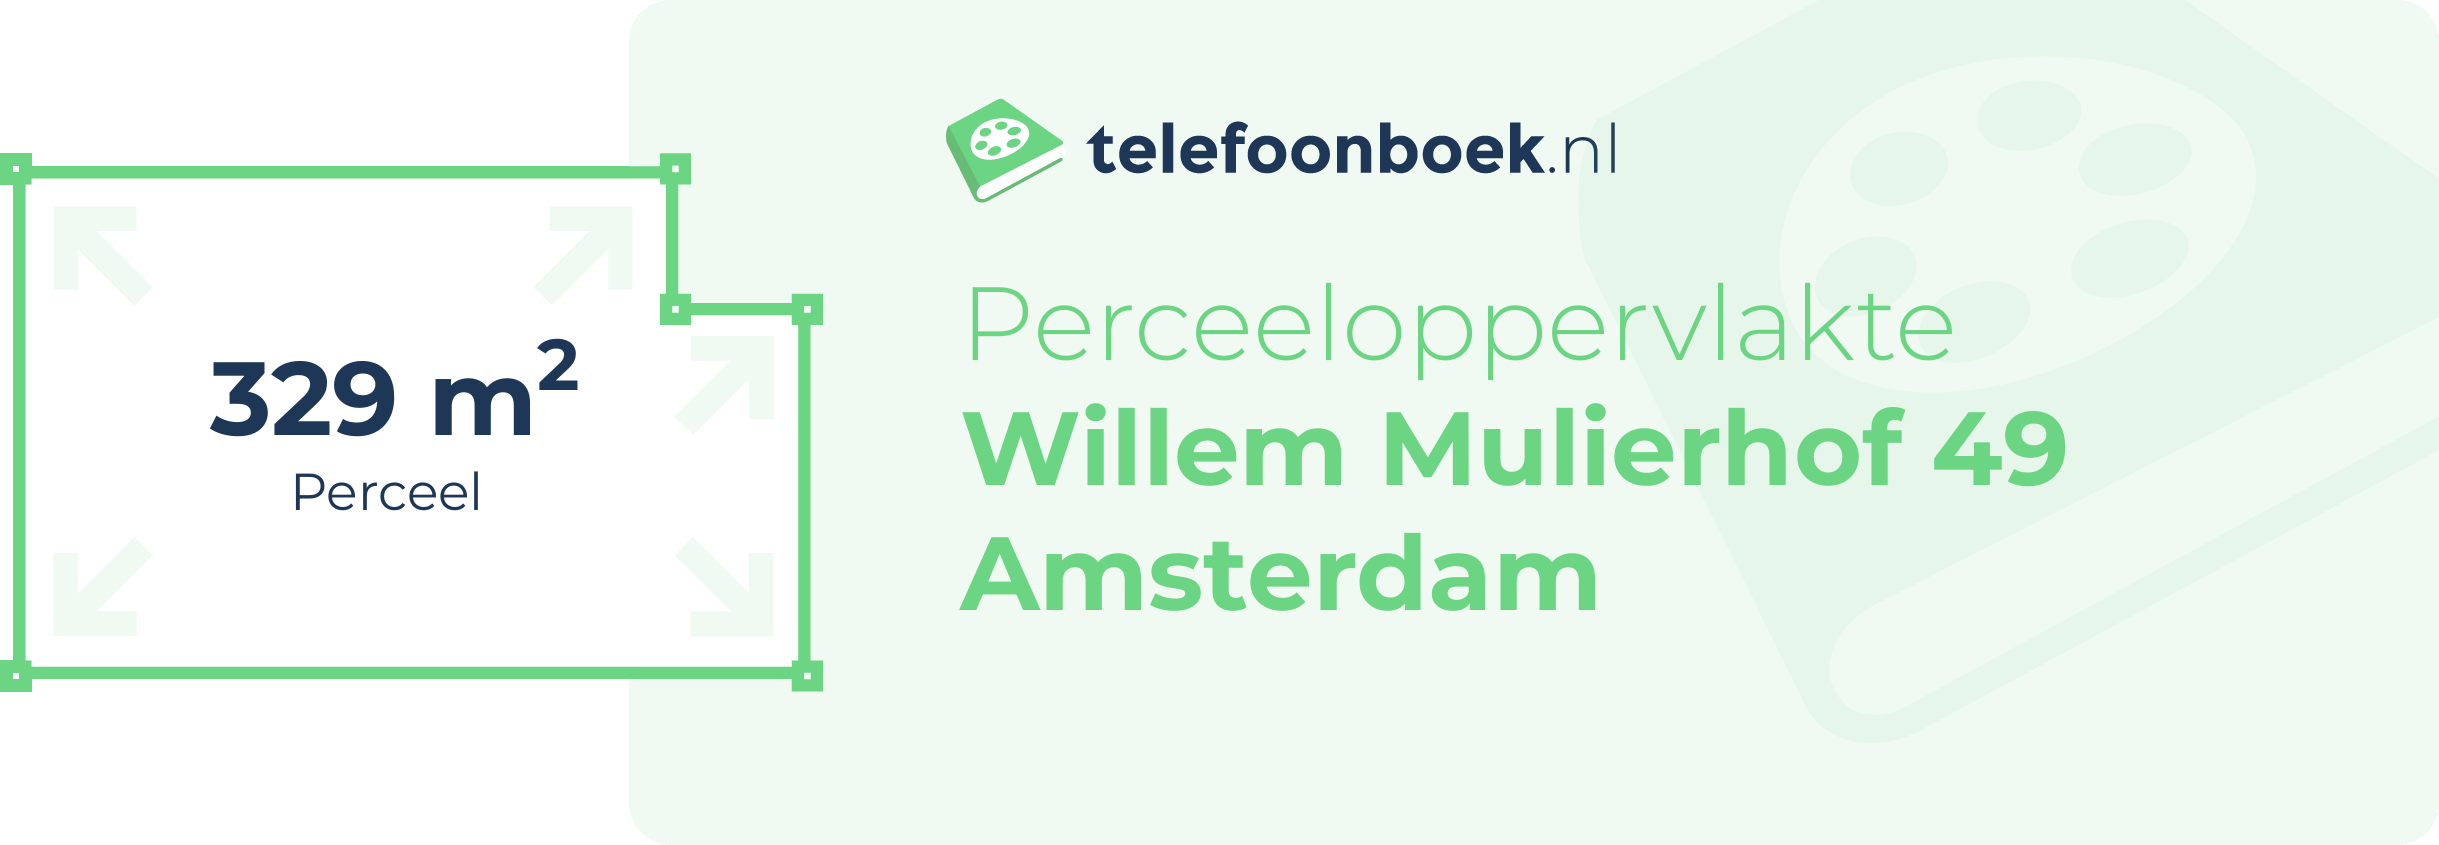 Perceeloppervlakte Willem Mulierhof 49 Amsterdam